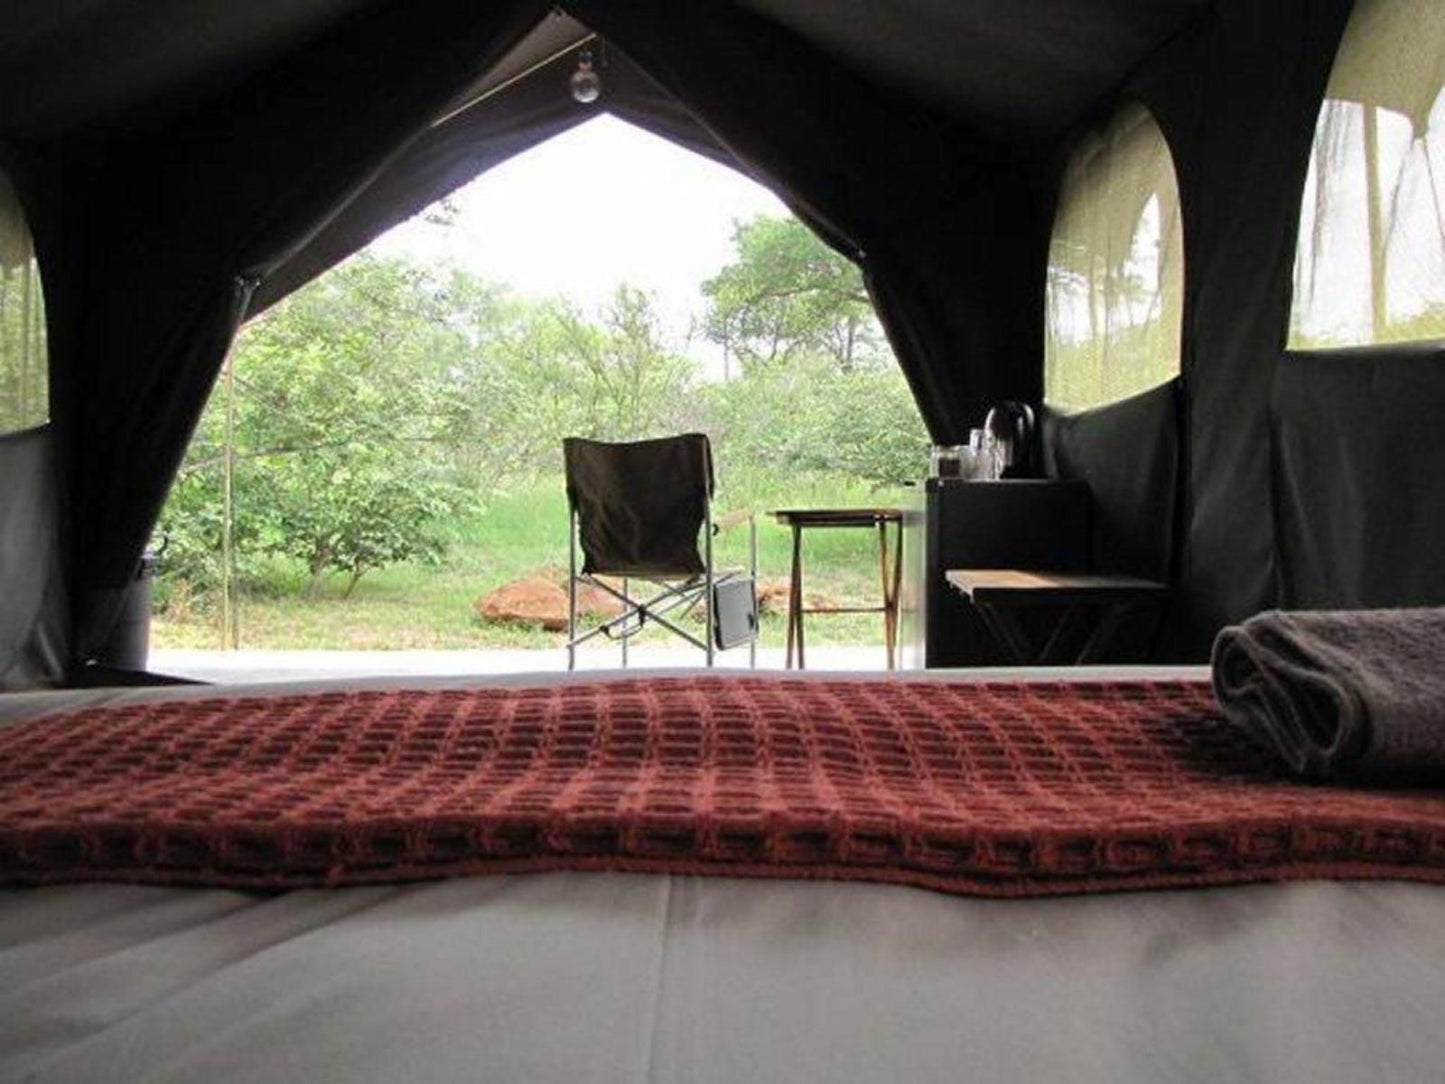 Klavati Game Lodge Hoedspruit Limpopo Province South Africa Tent, Architecture